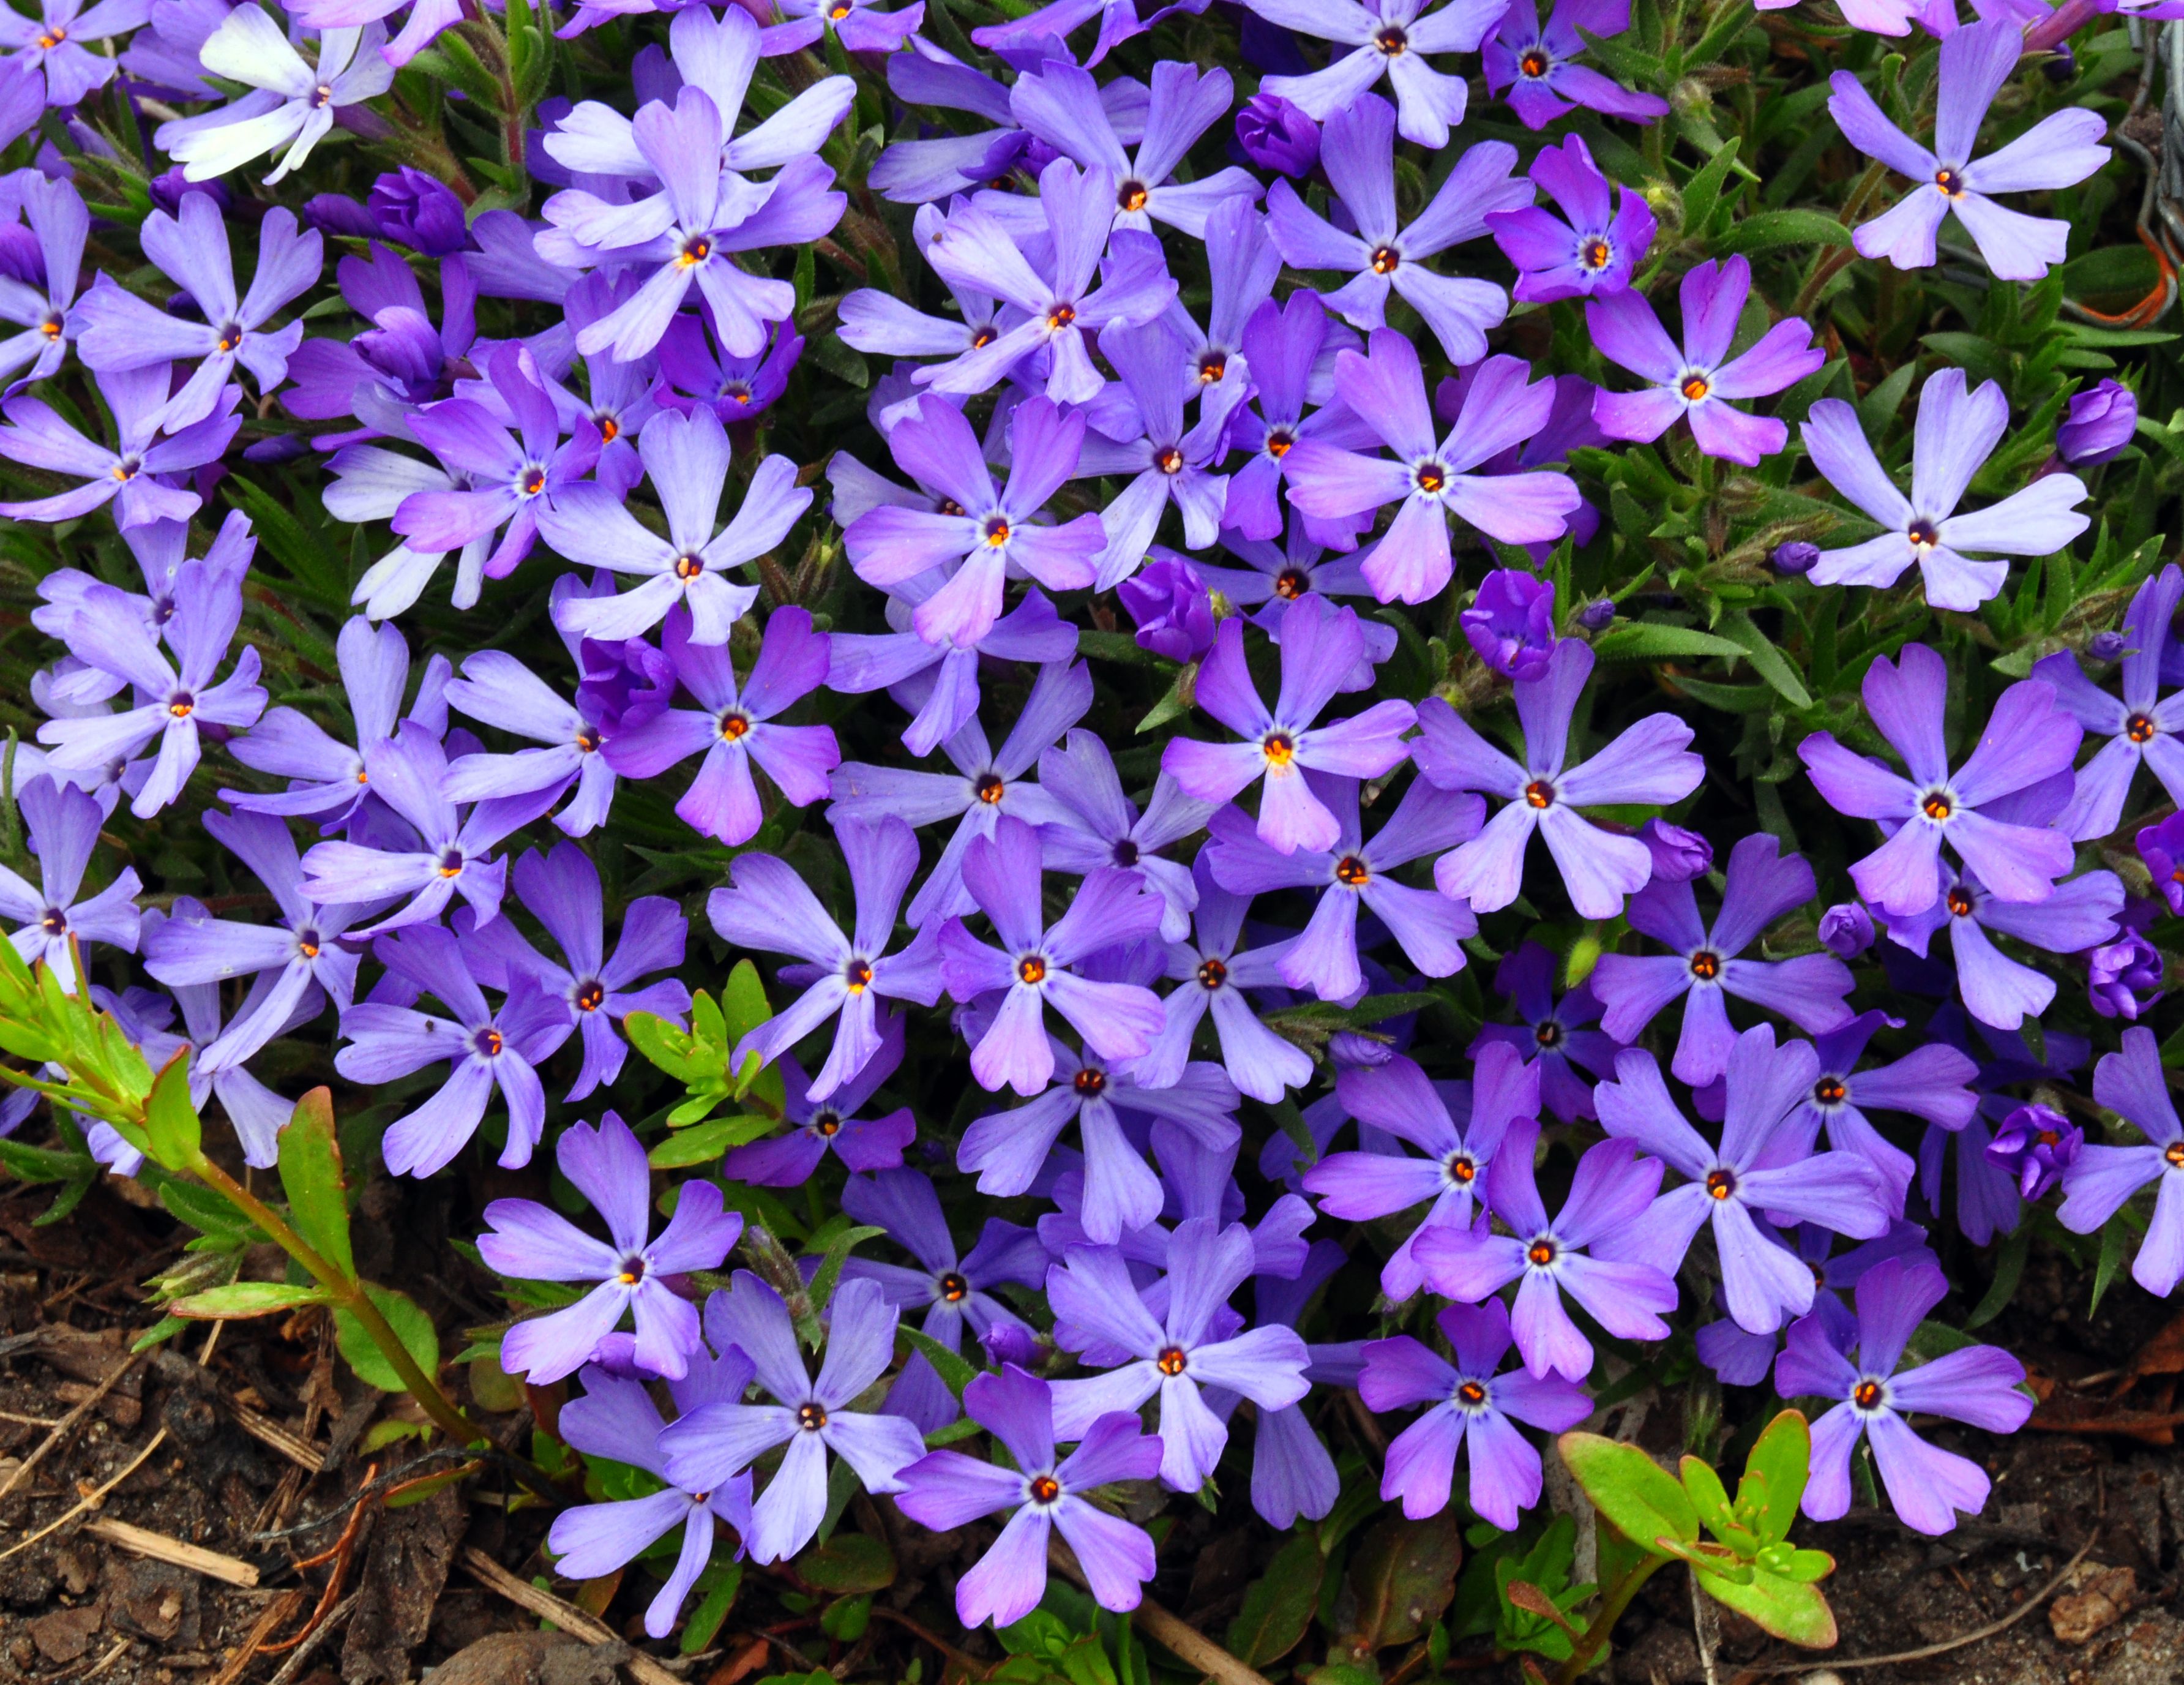 images/plants/phlox/phl-violet-pinwheels/phl-violet-pinwheels-0005.jpg